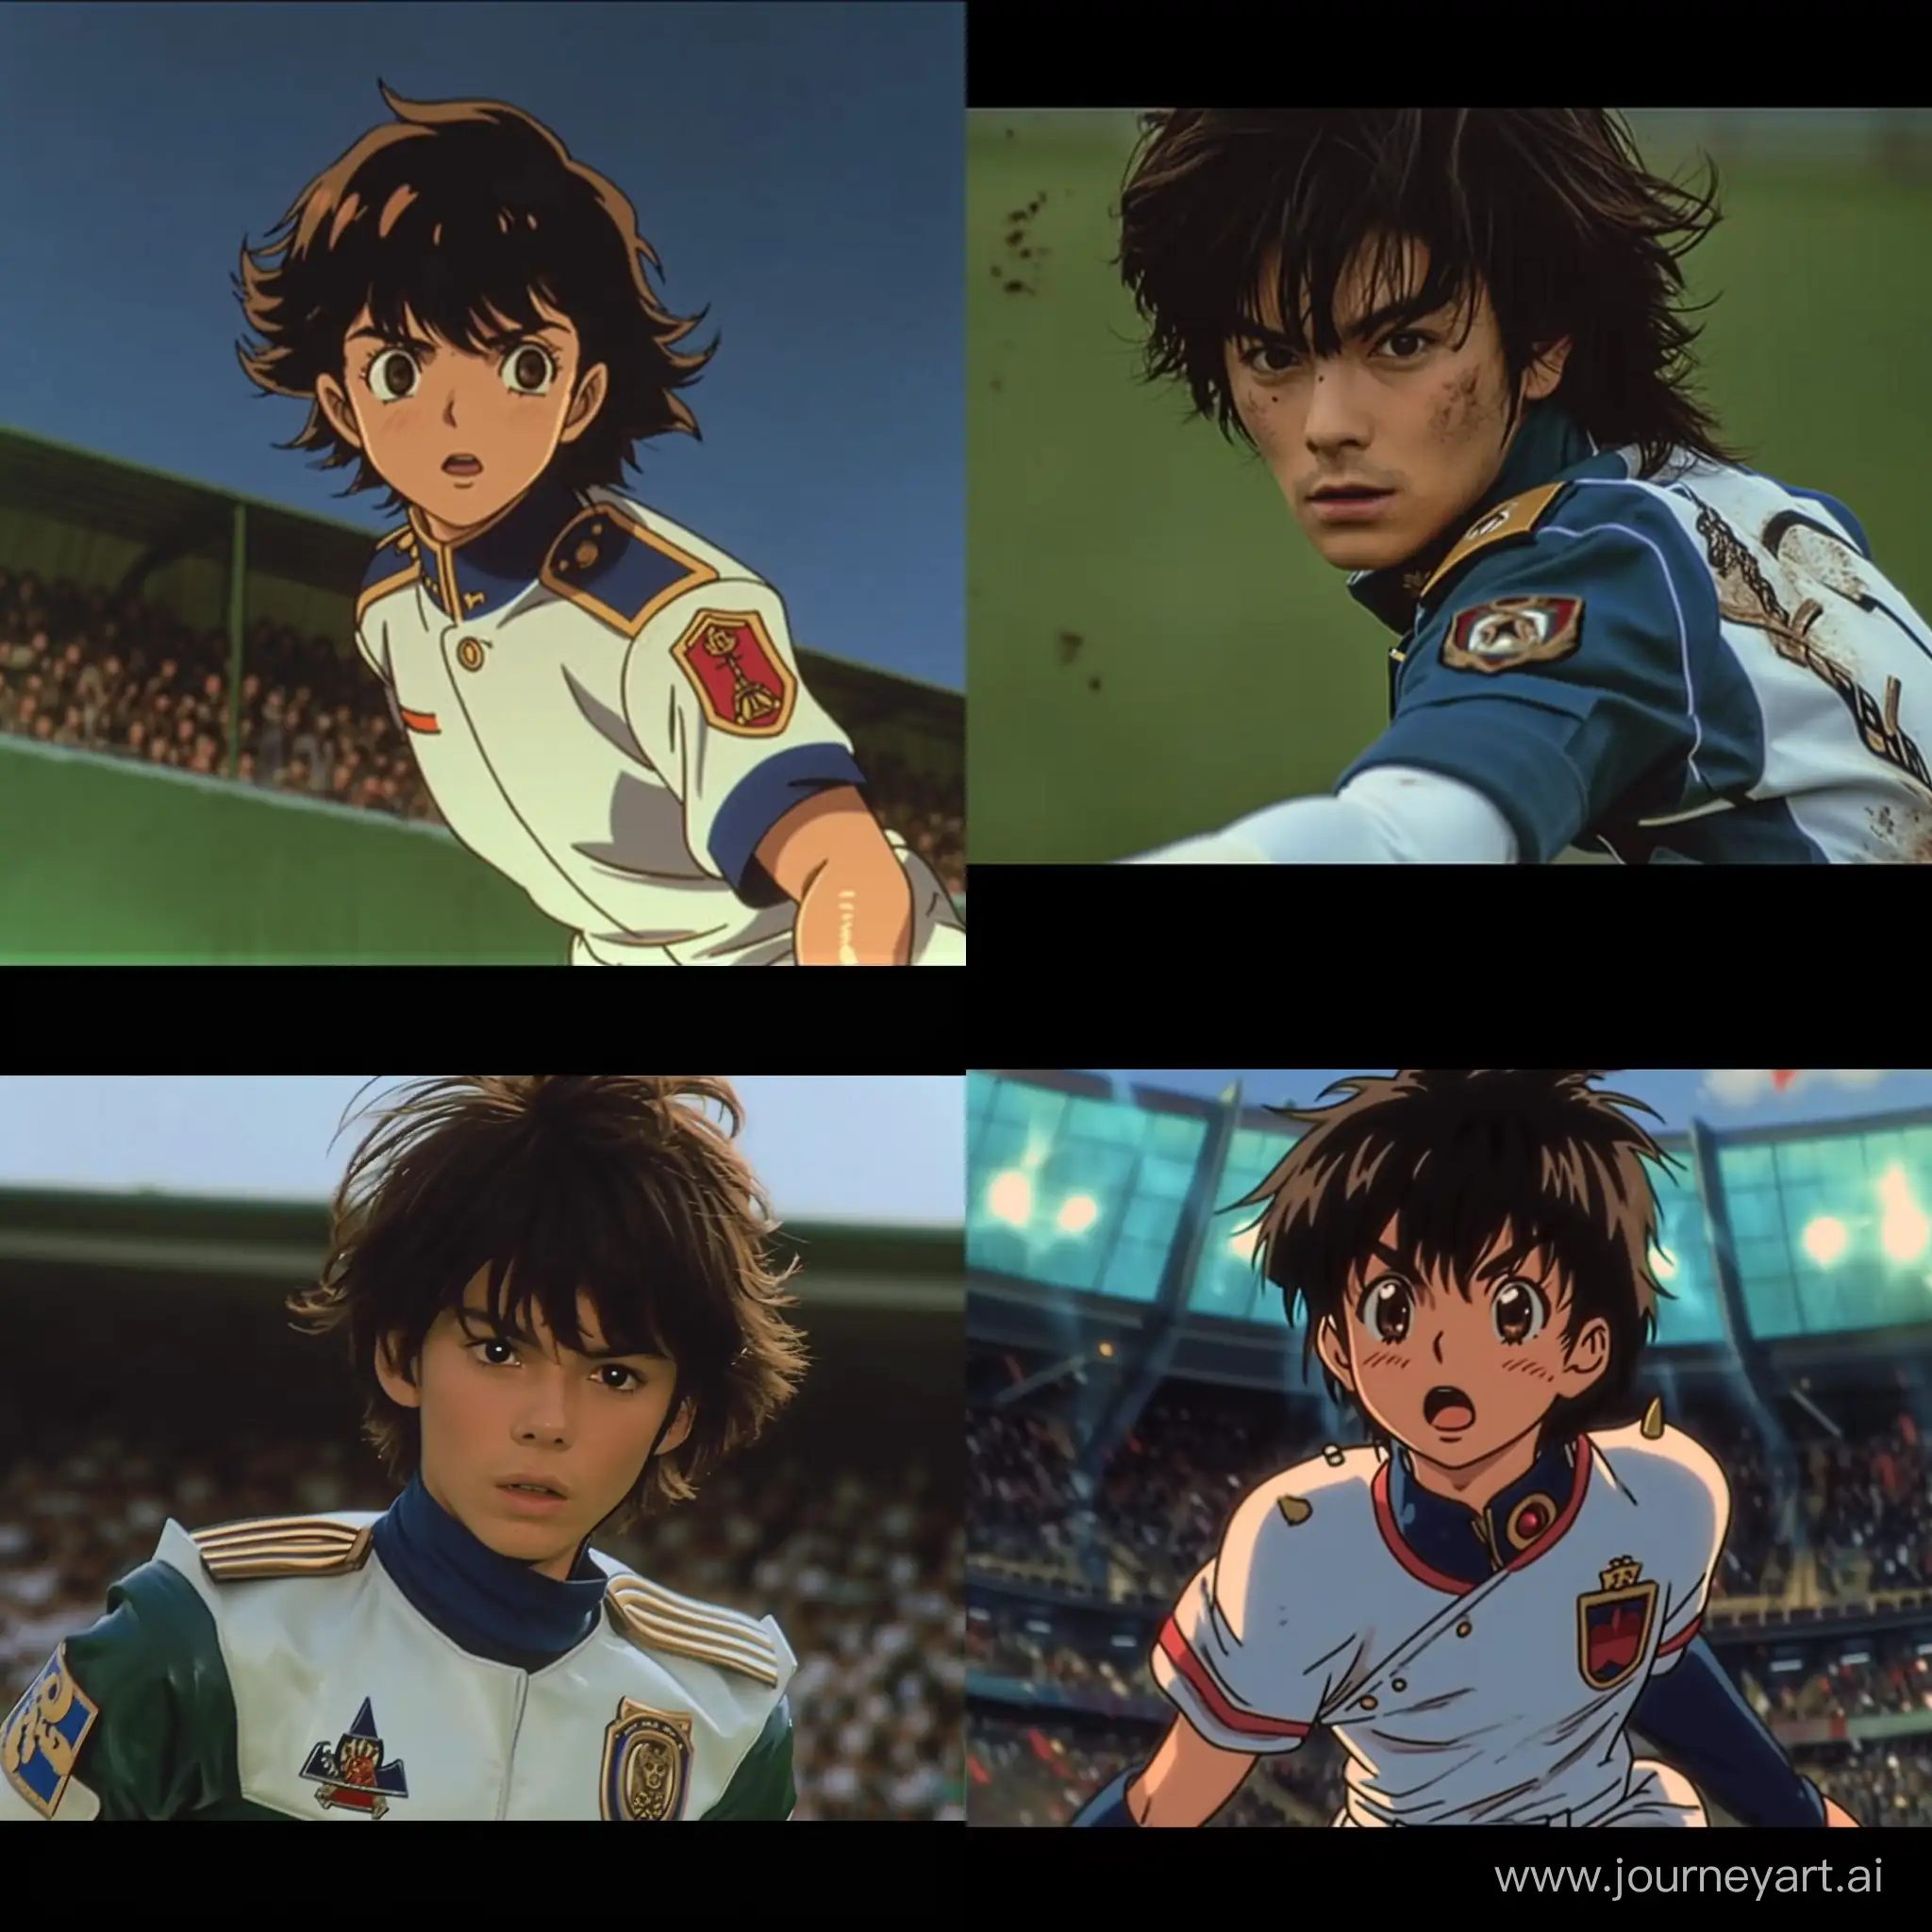 Captain-Tsubasa-RealLife-Photo-Soccer-Action-in-Stunning-Realism